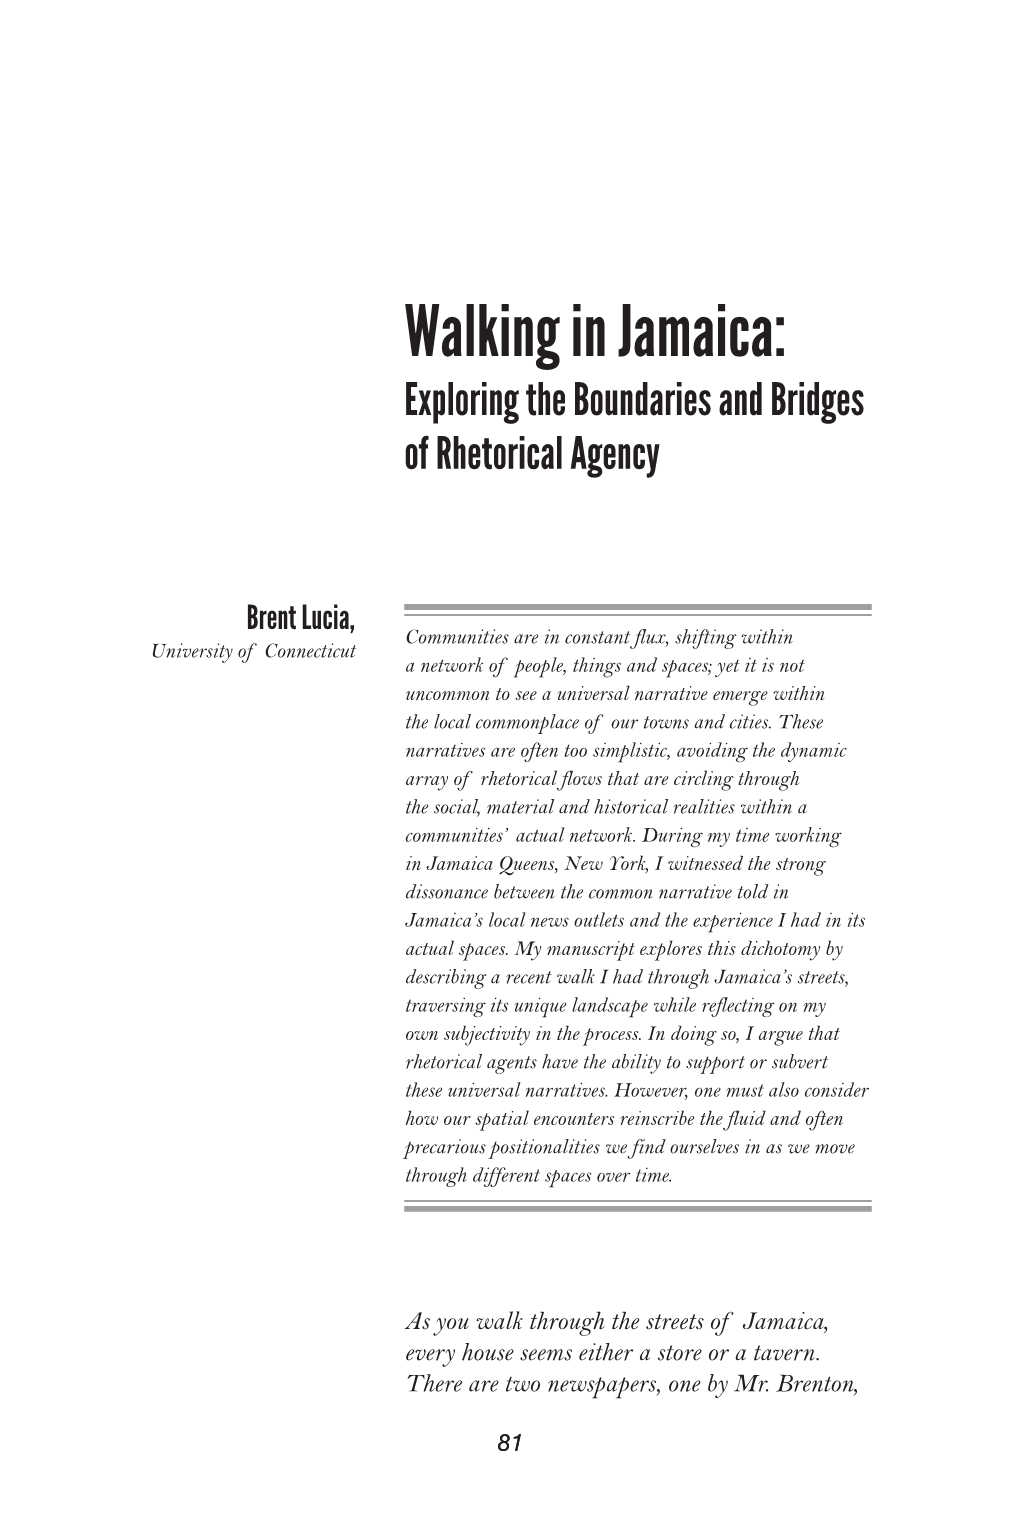 Walking in Jamaica: Exploring the Boundaries and Bridges of Rhetorical Agency